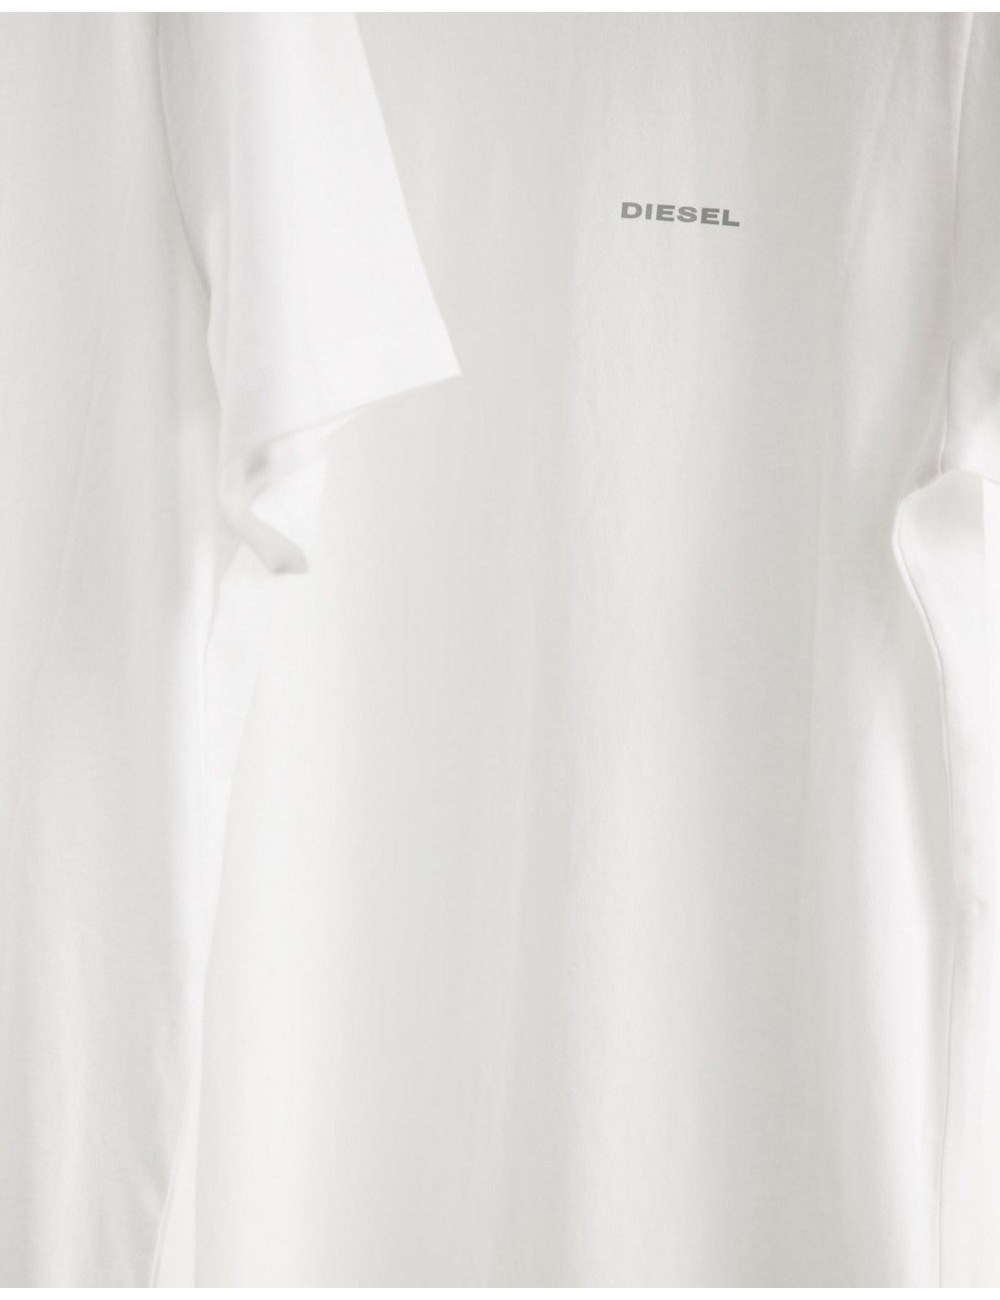 Diesel 3 pack t-shirt in white